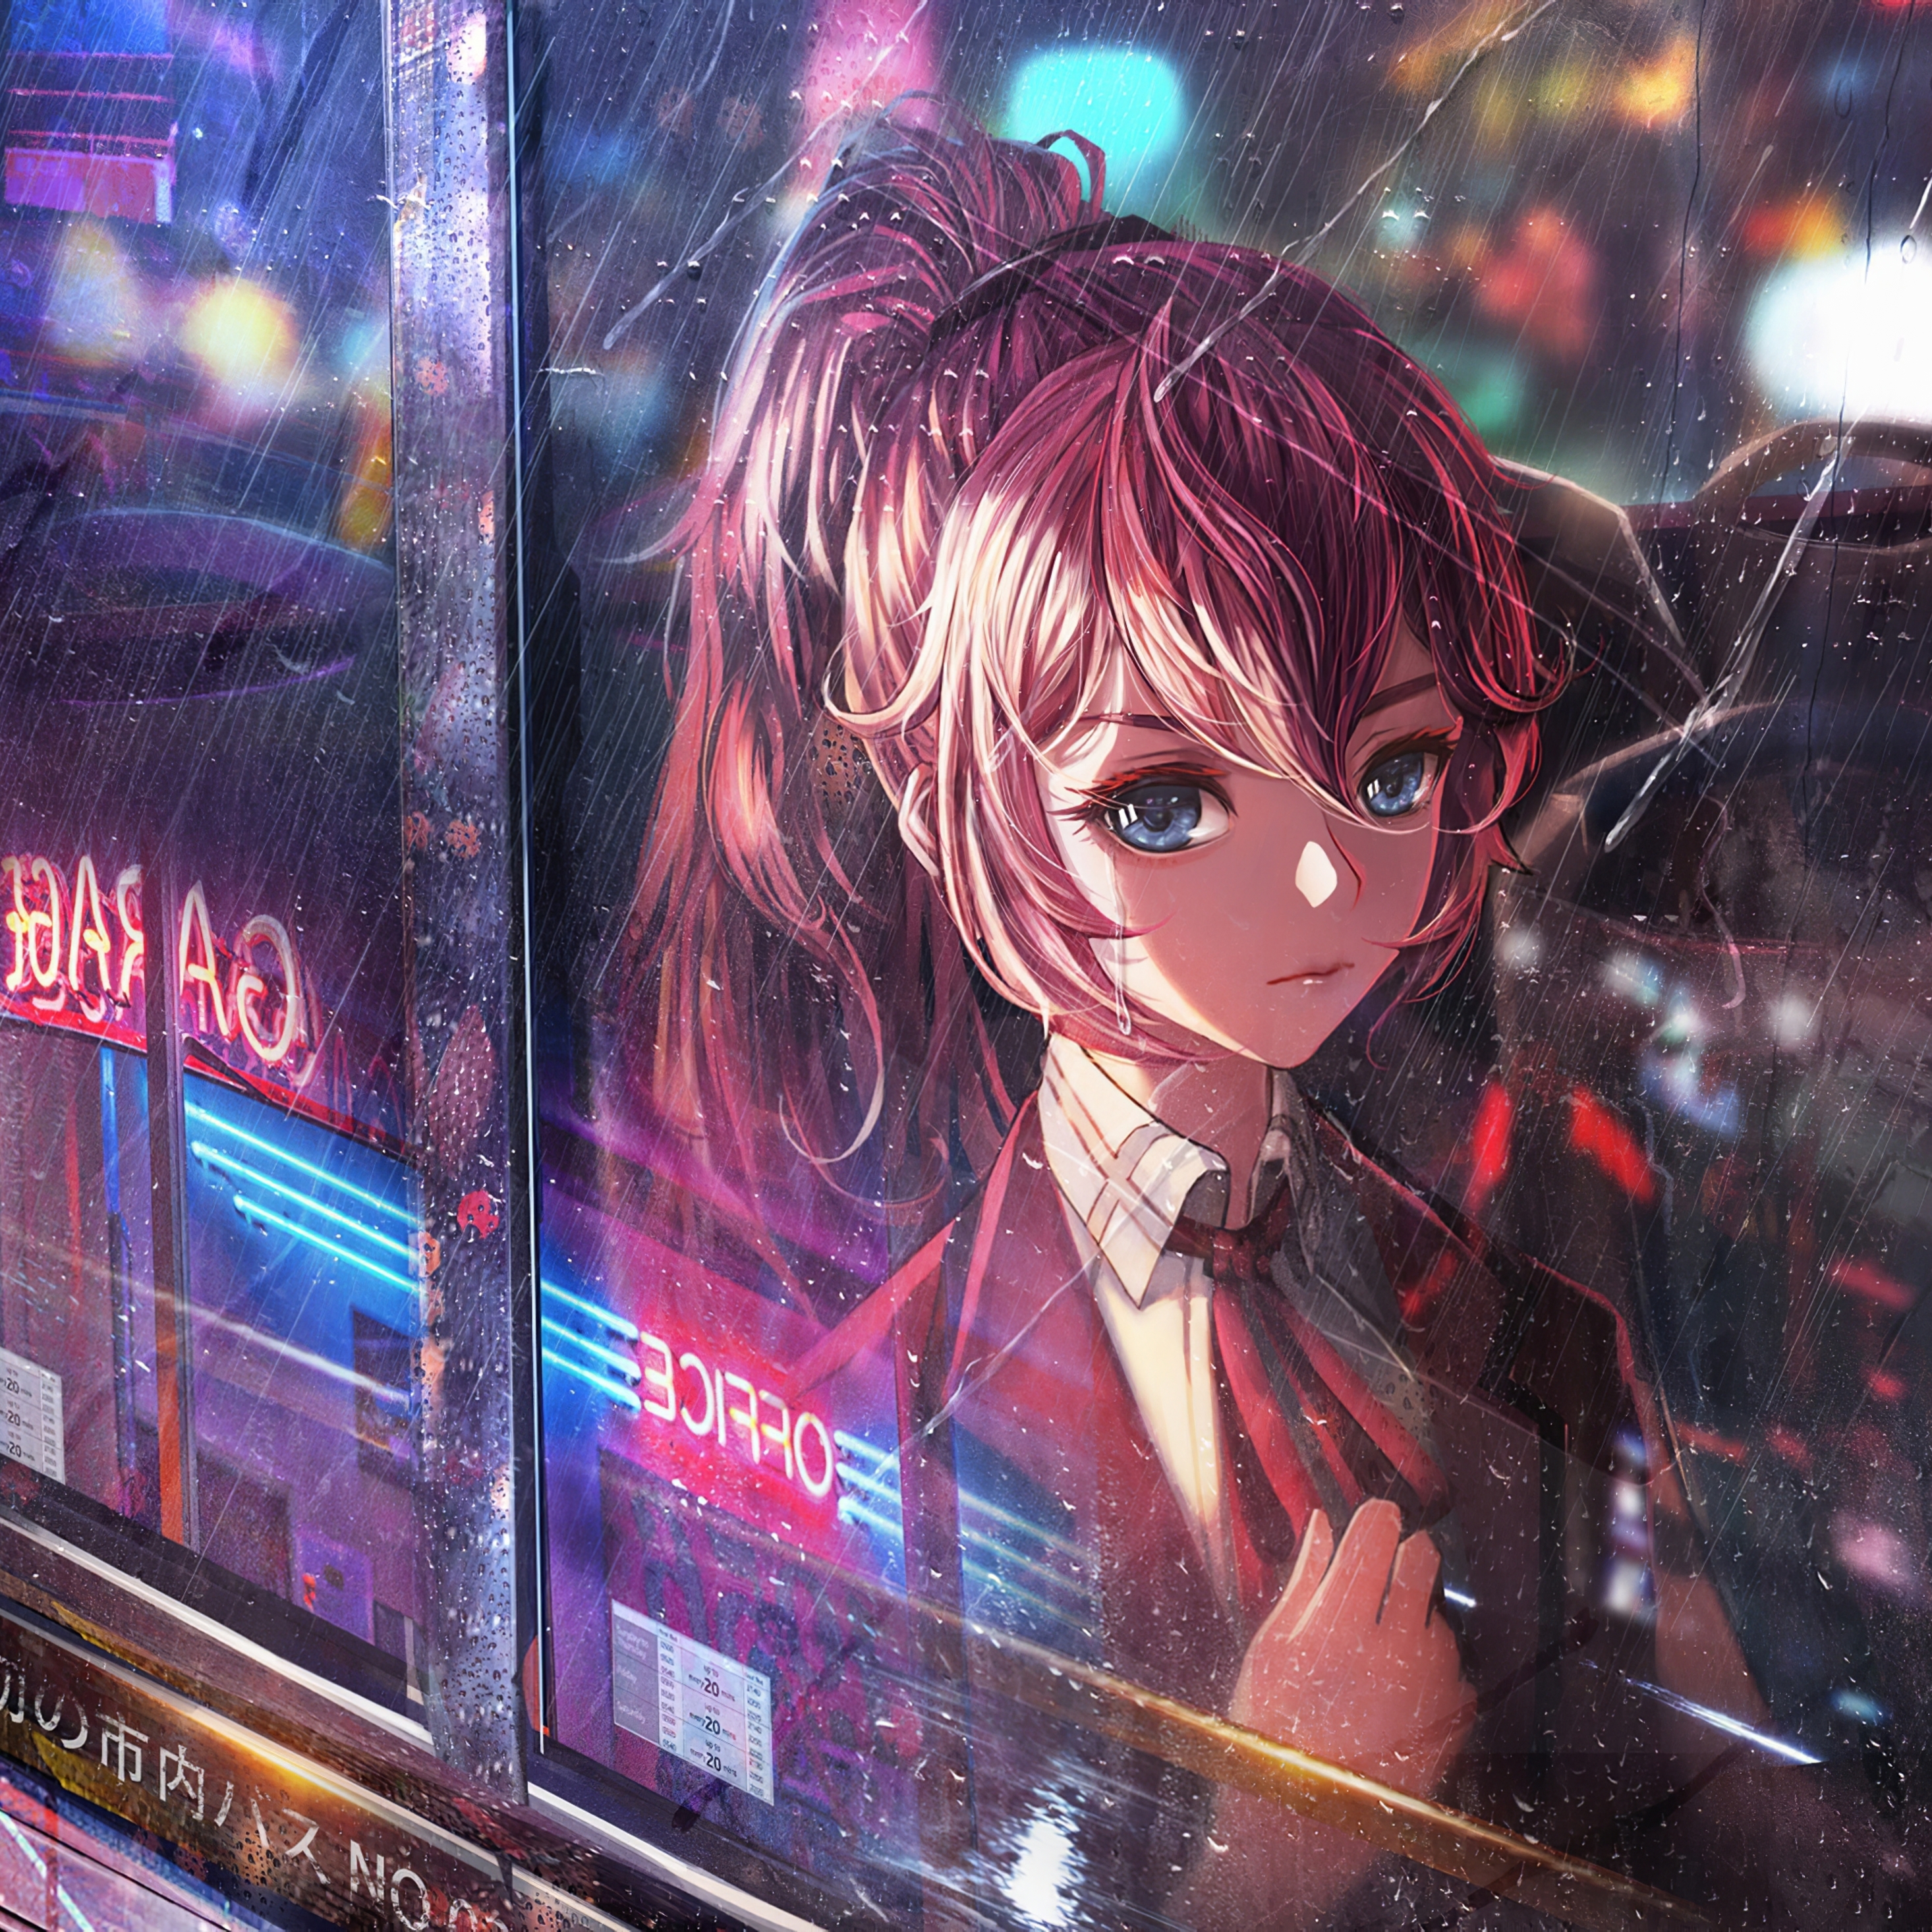 Anime Girl Bus Window Neon City 4k iPad Pro Retina Display HD 4k Wallpaper, Image, Background, Photo and Picture